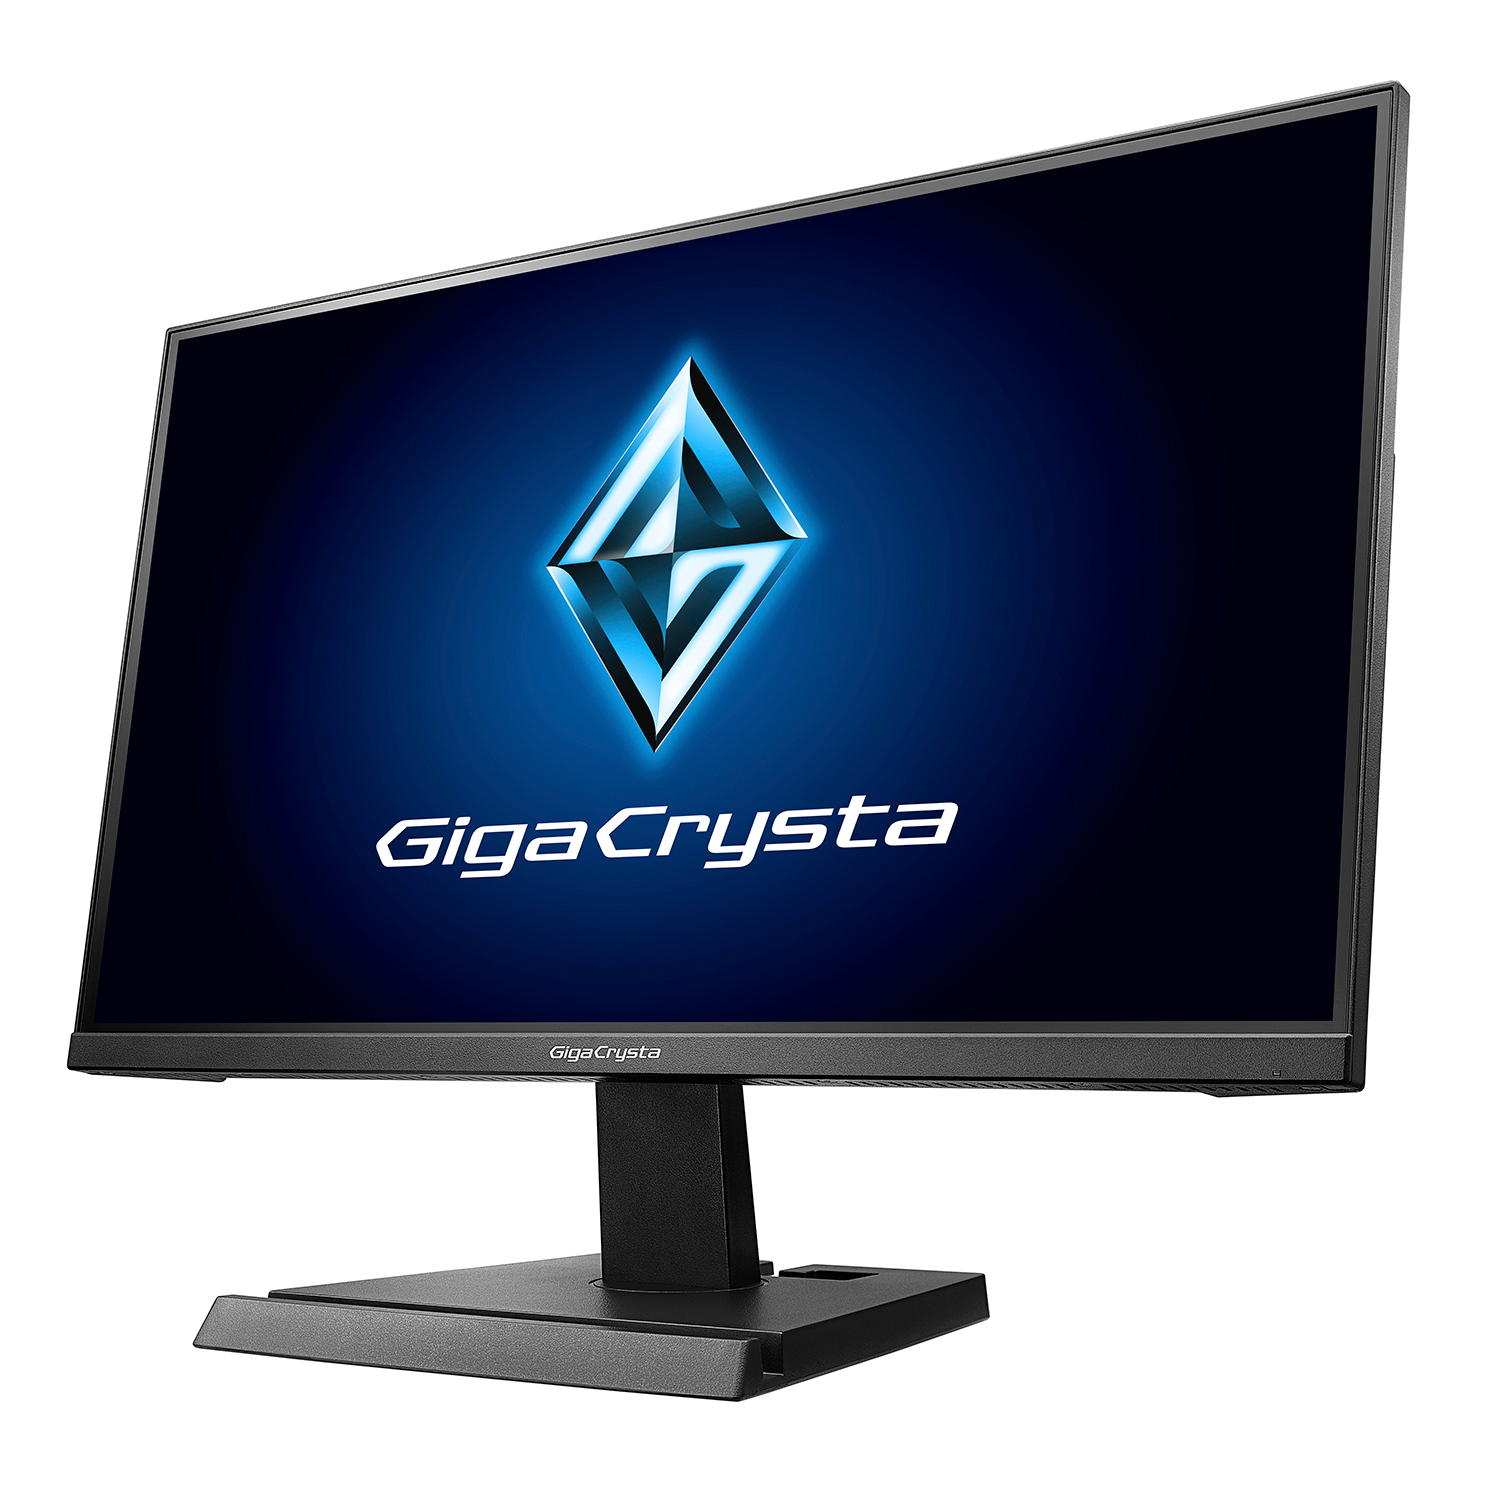 LCD-GC221HXB | ゲーミングモニター「GigaCrysta」 | IODATA アイ 